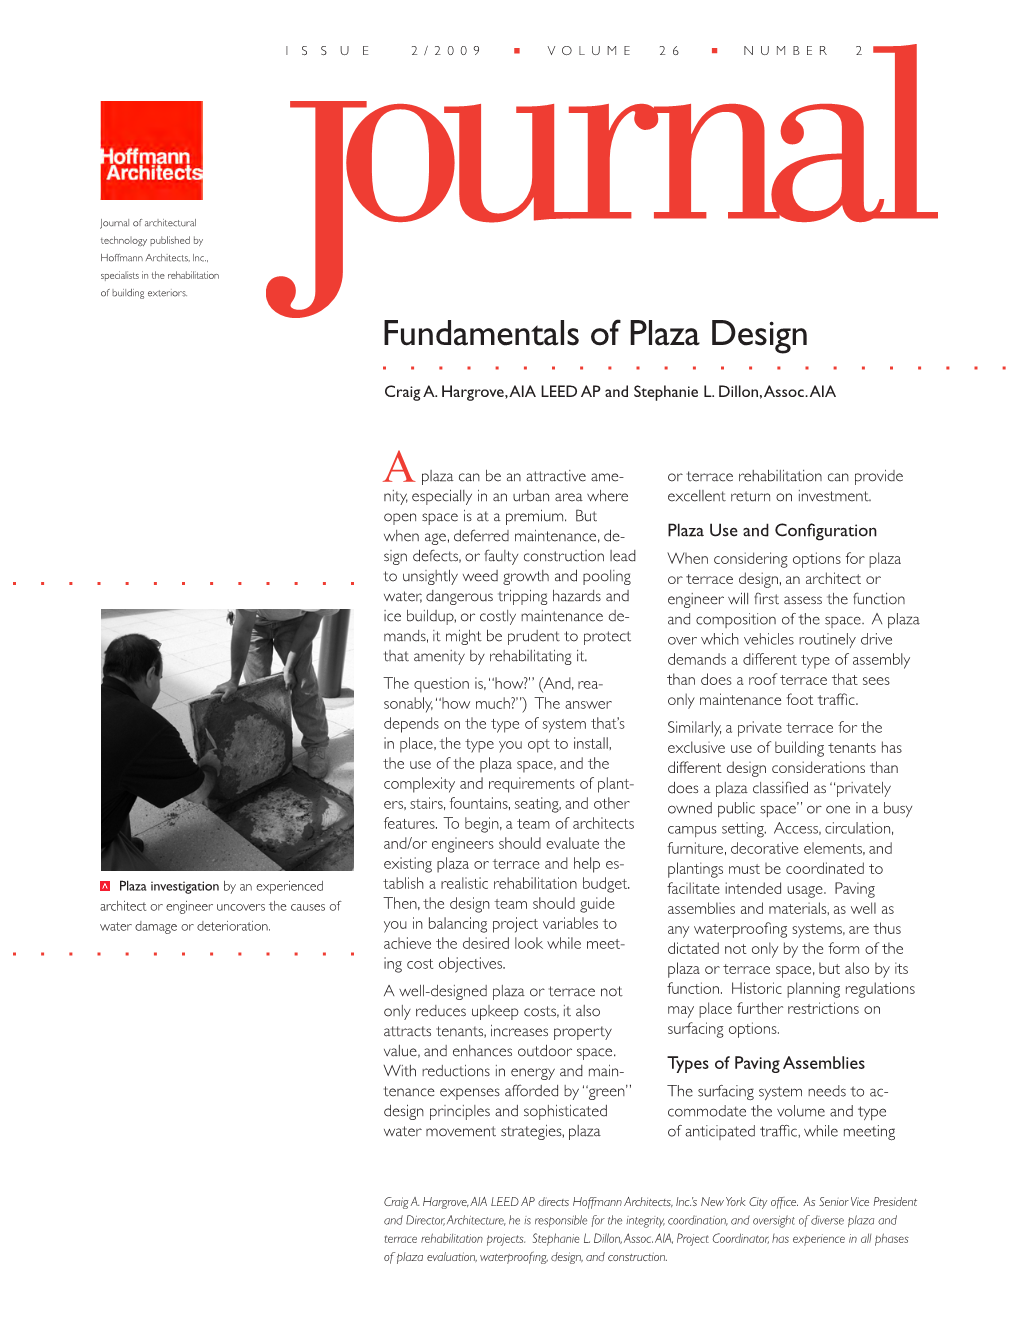 Fundamentals of Plaza Design